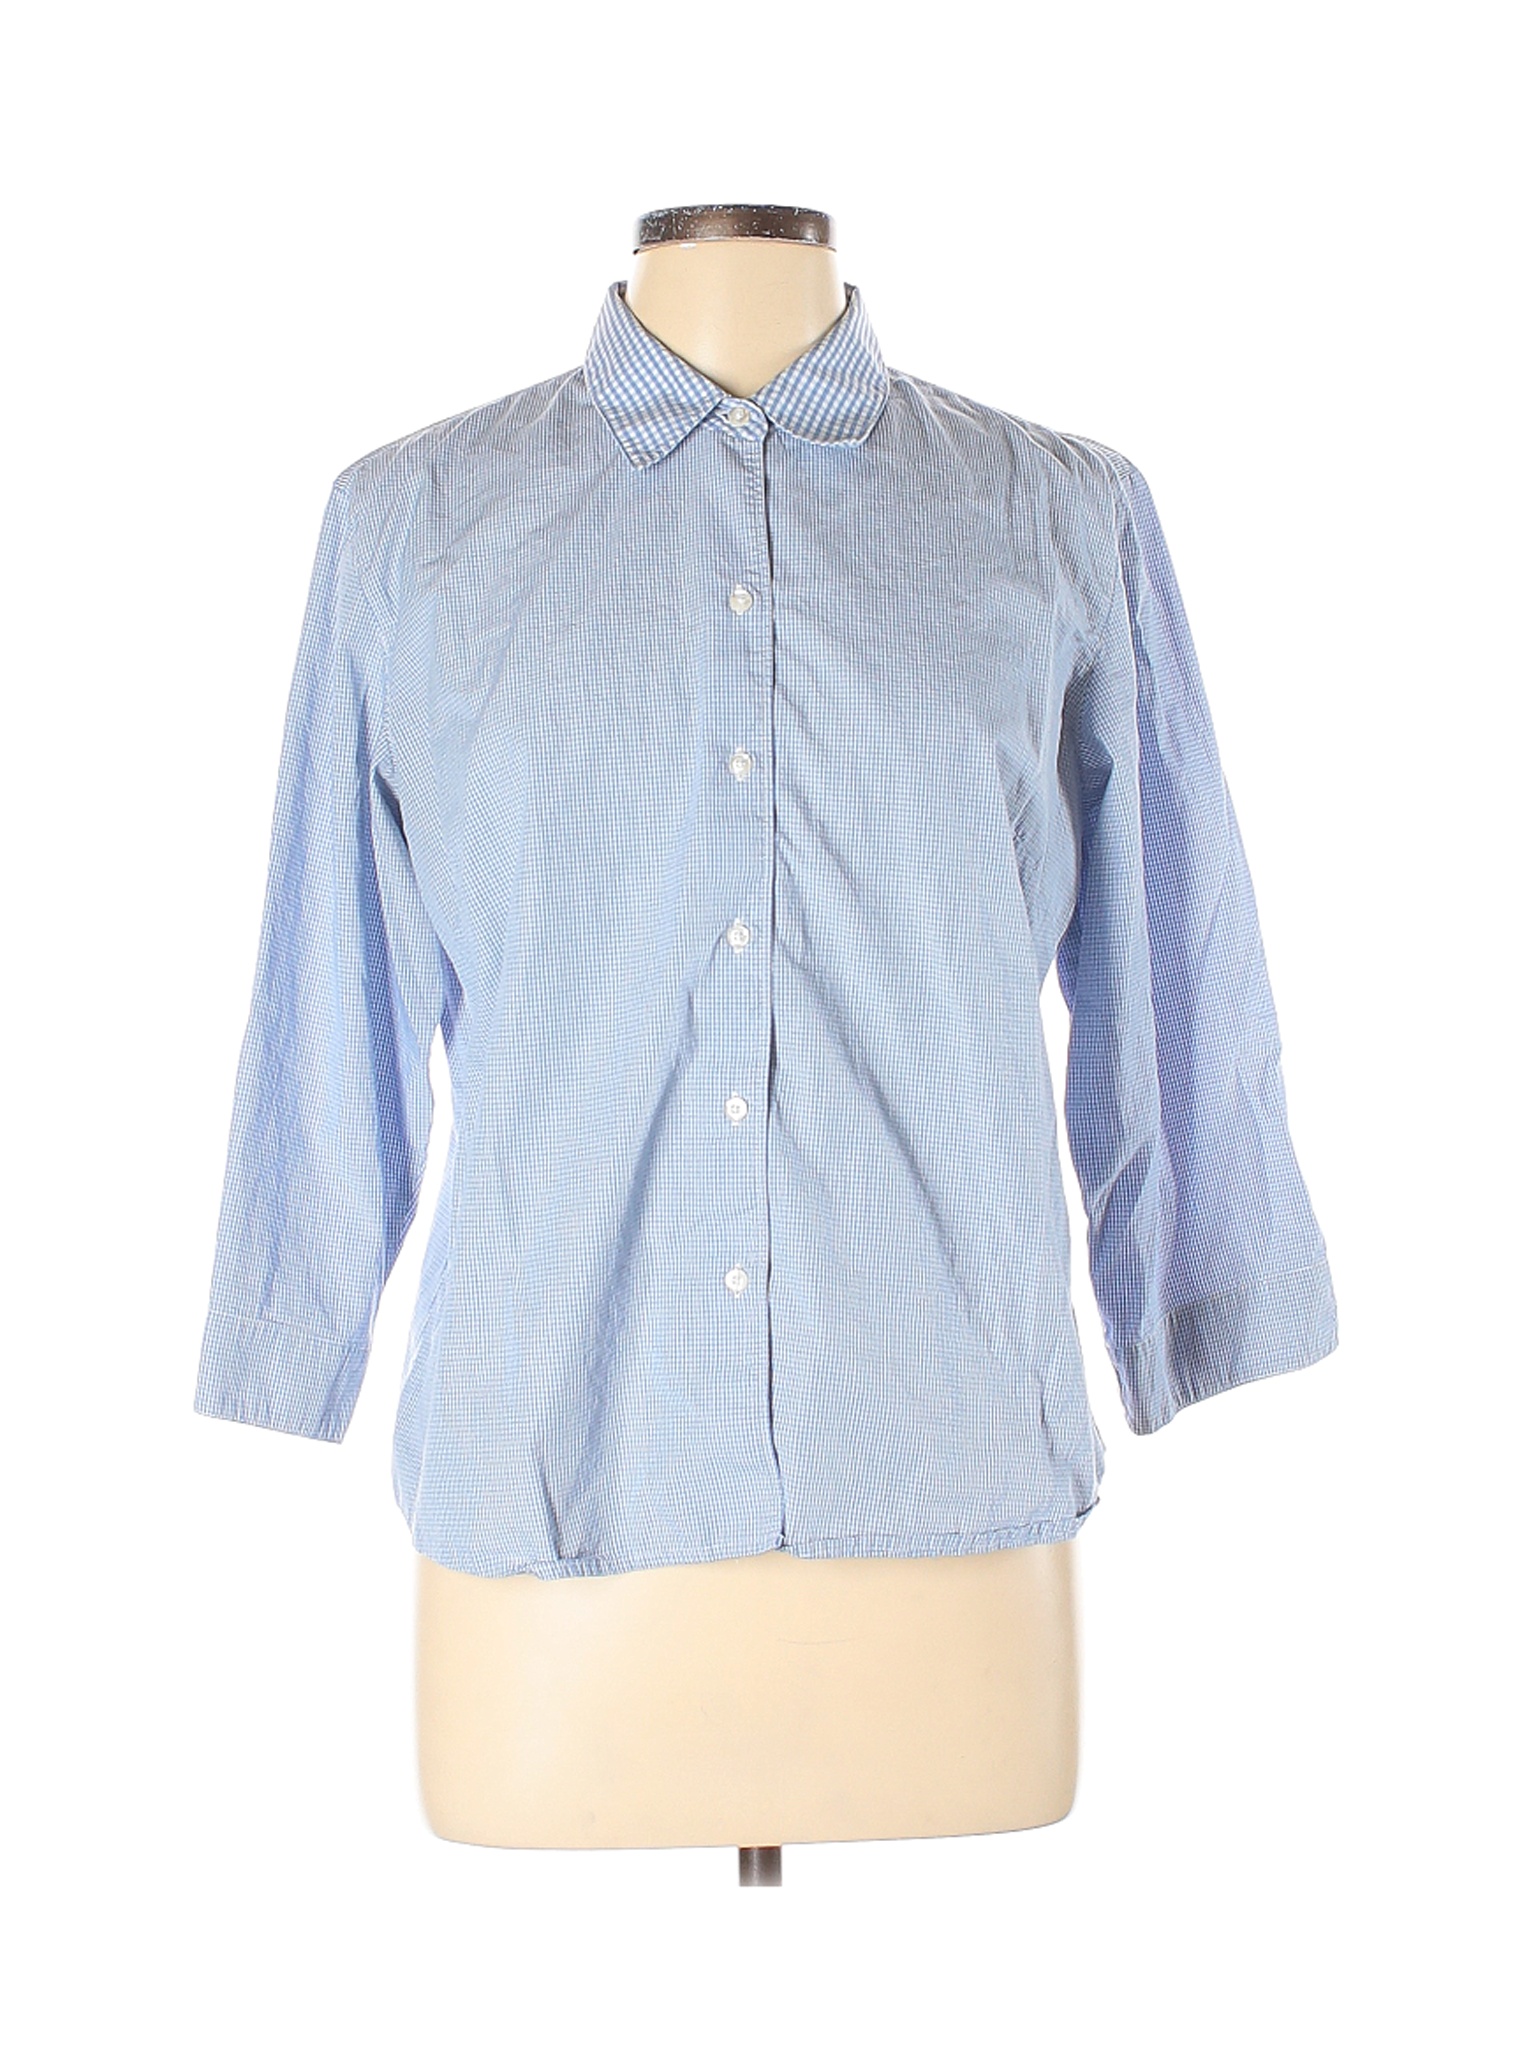 Liz Claiborne Women Blue Long Sleeve Button-Down Shirt L | eBay